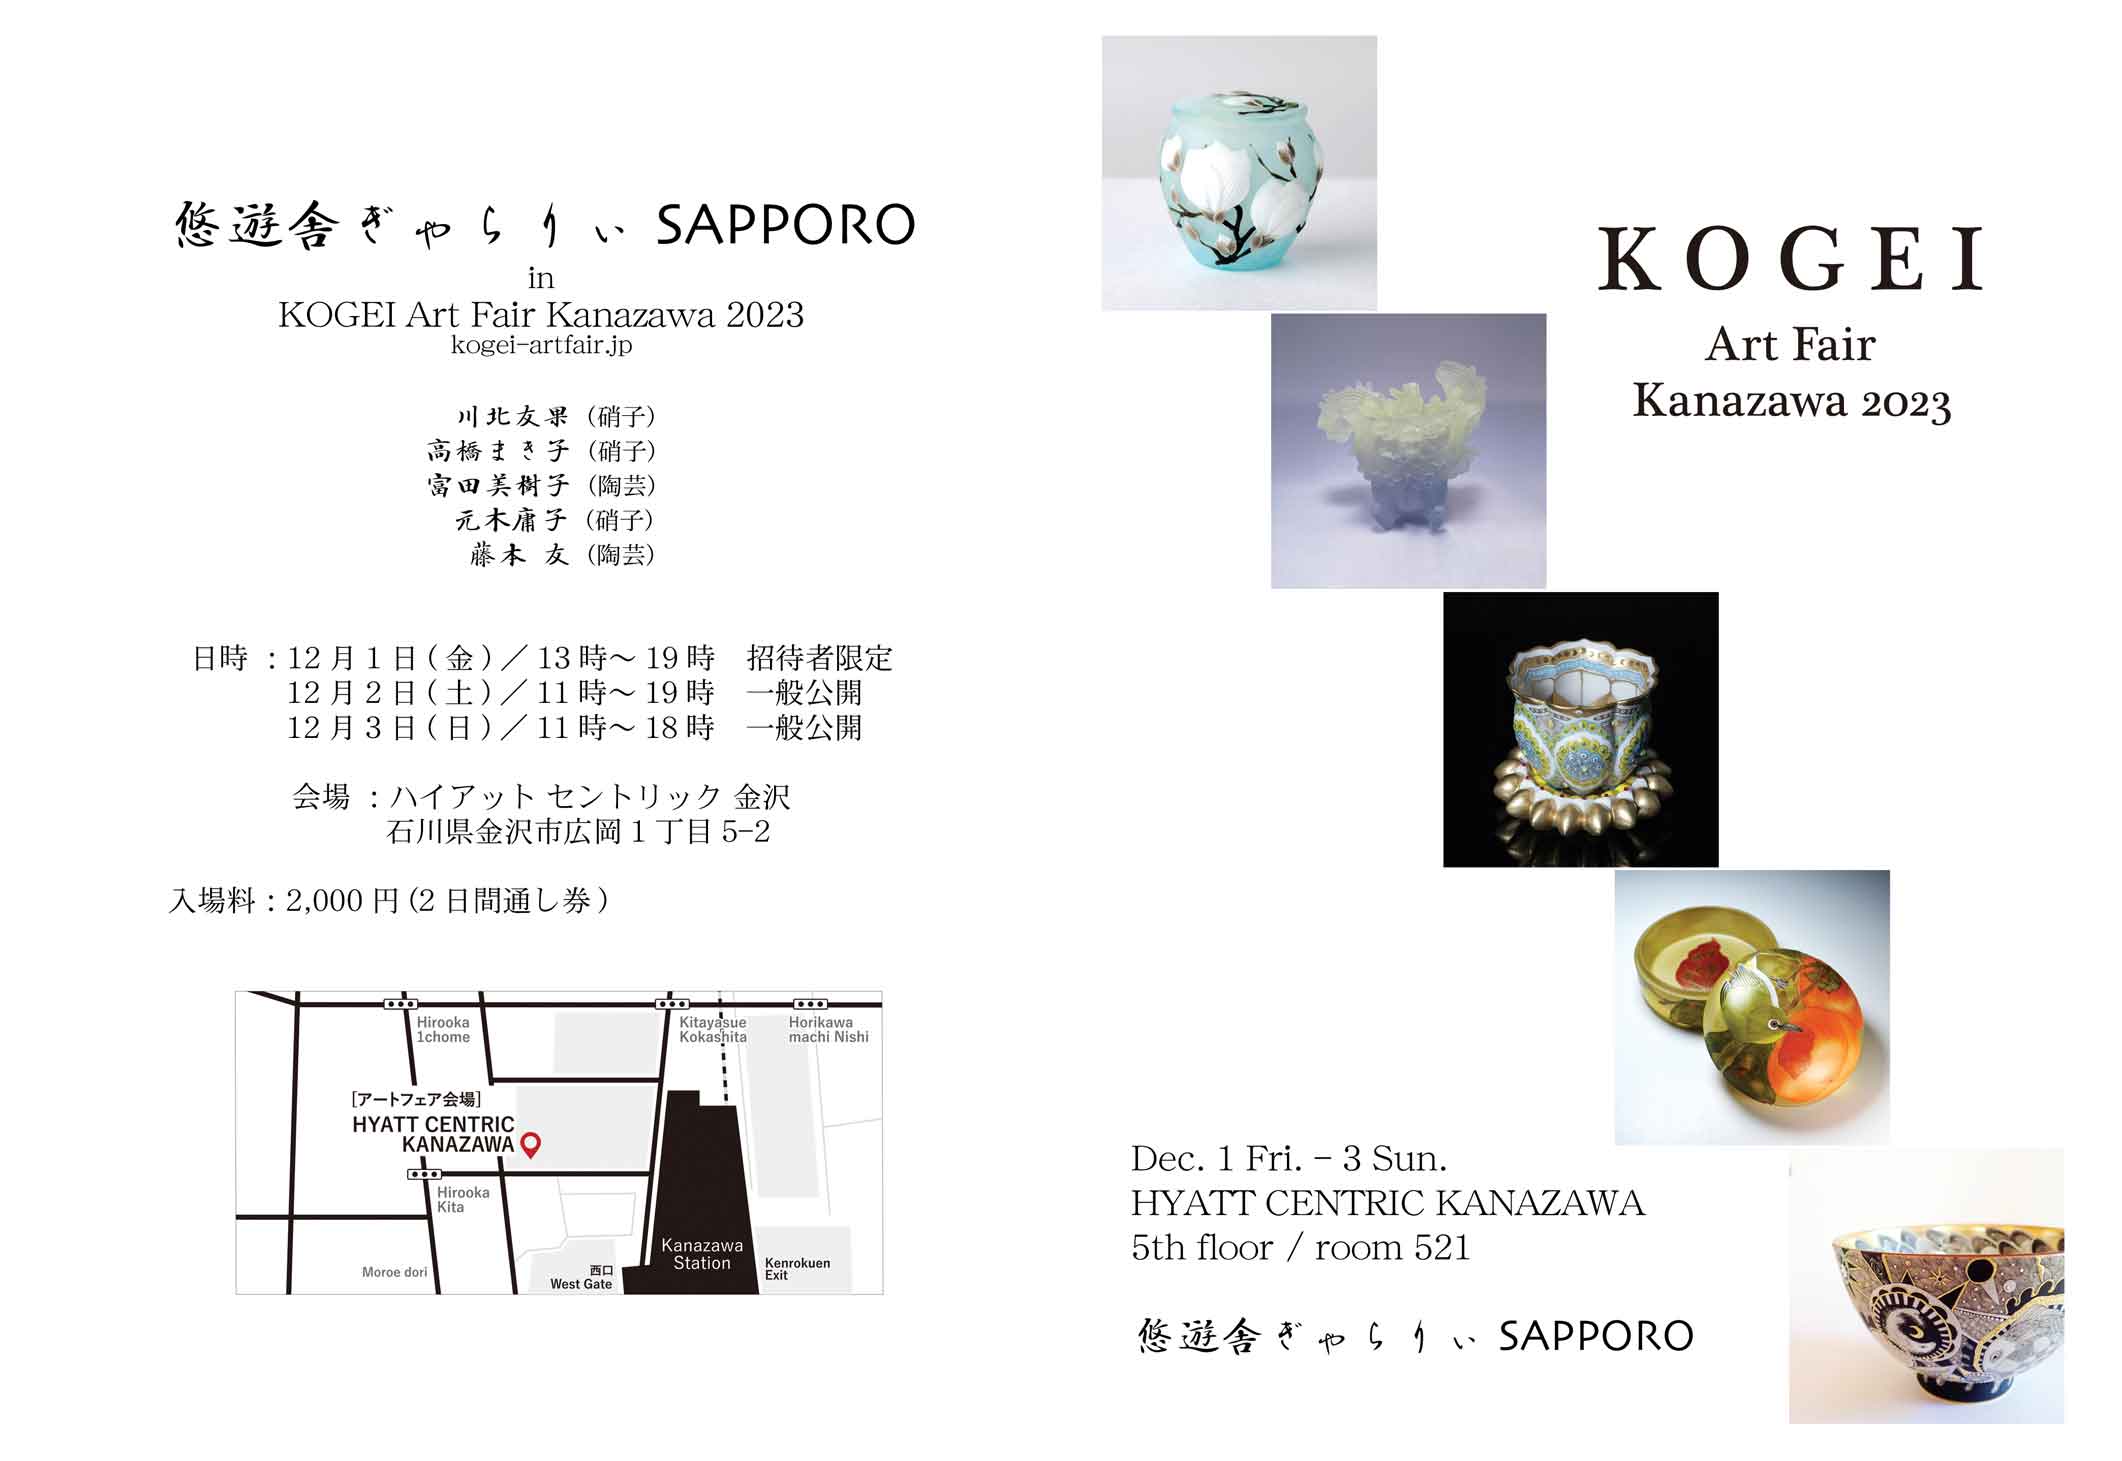 KOGEI Art Fair Kanazawa 2023